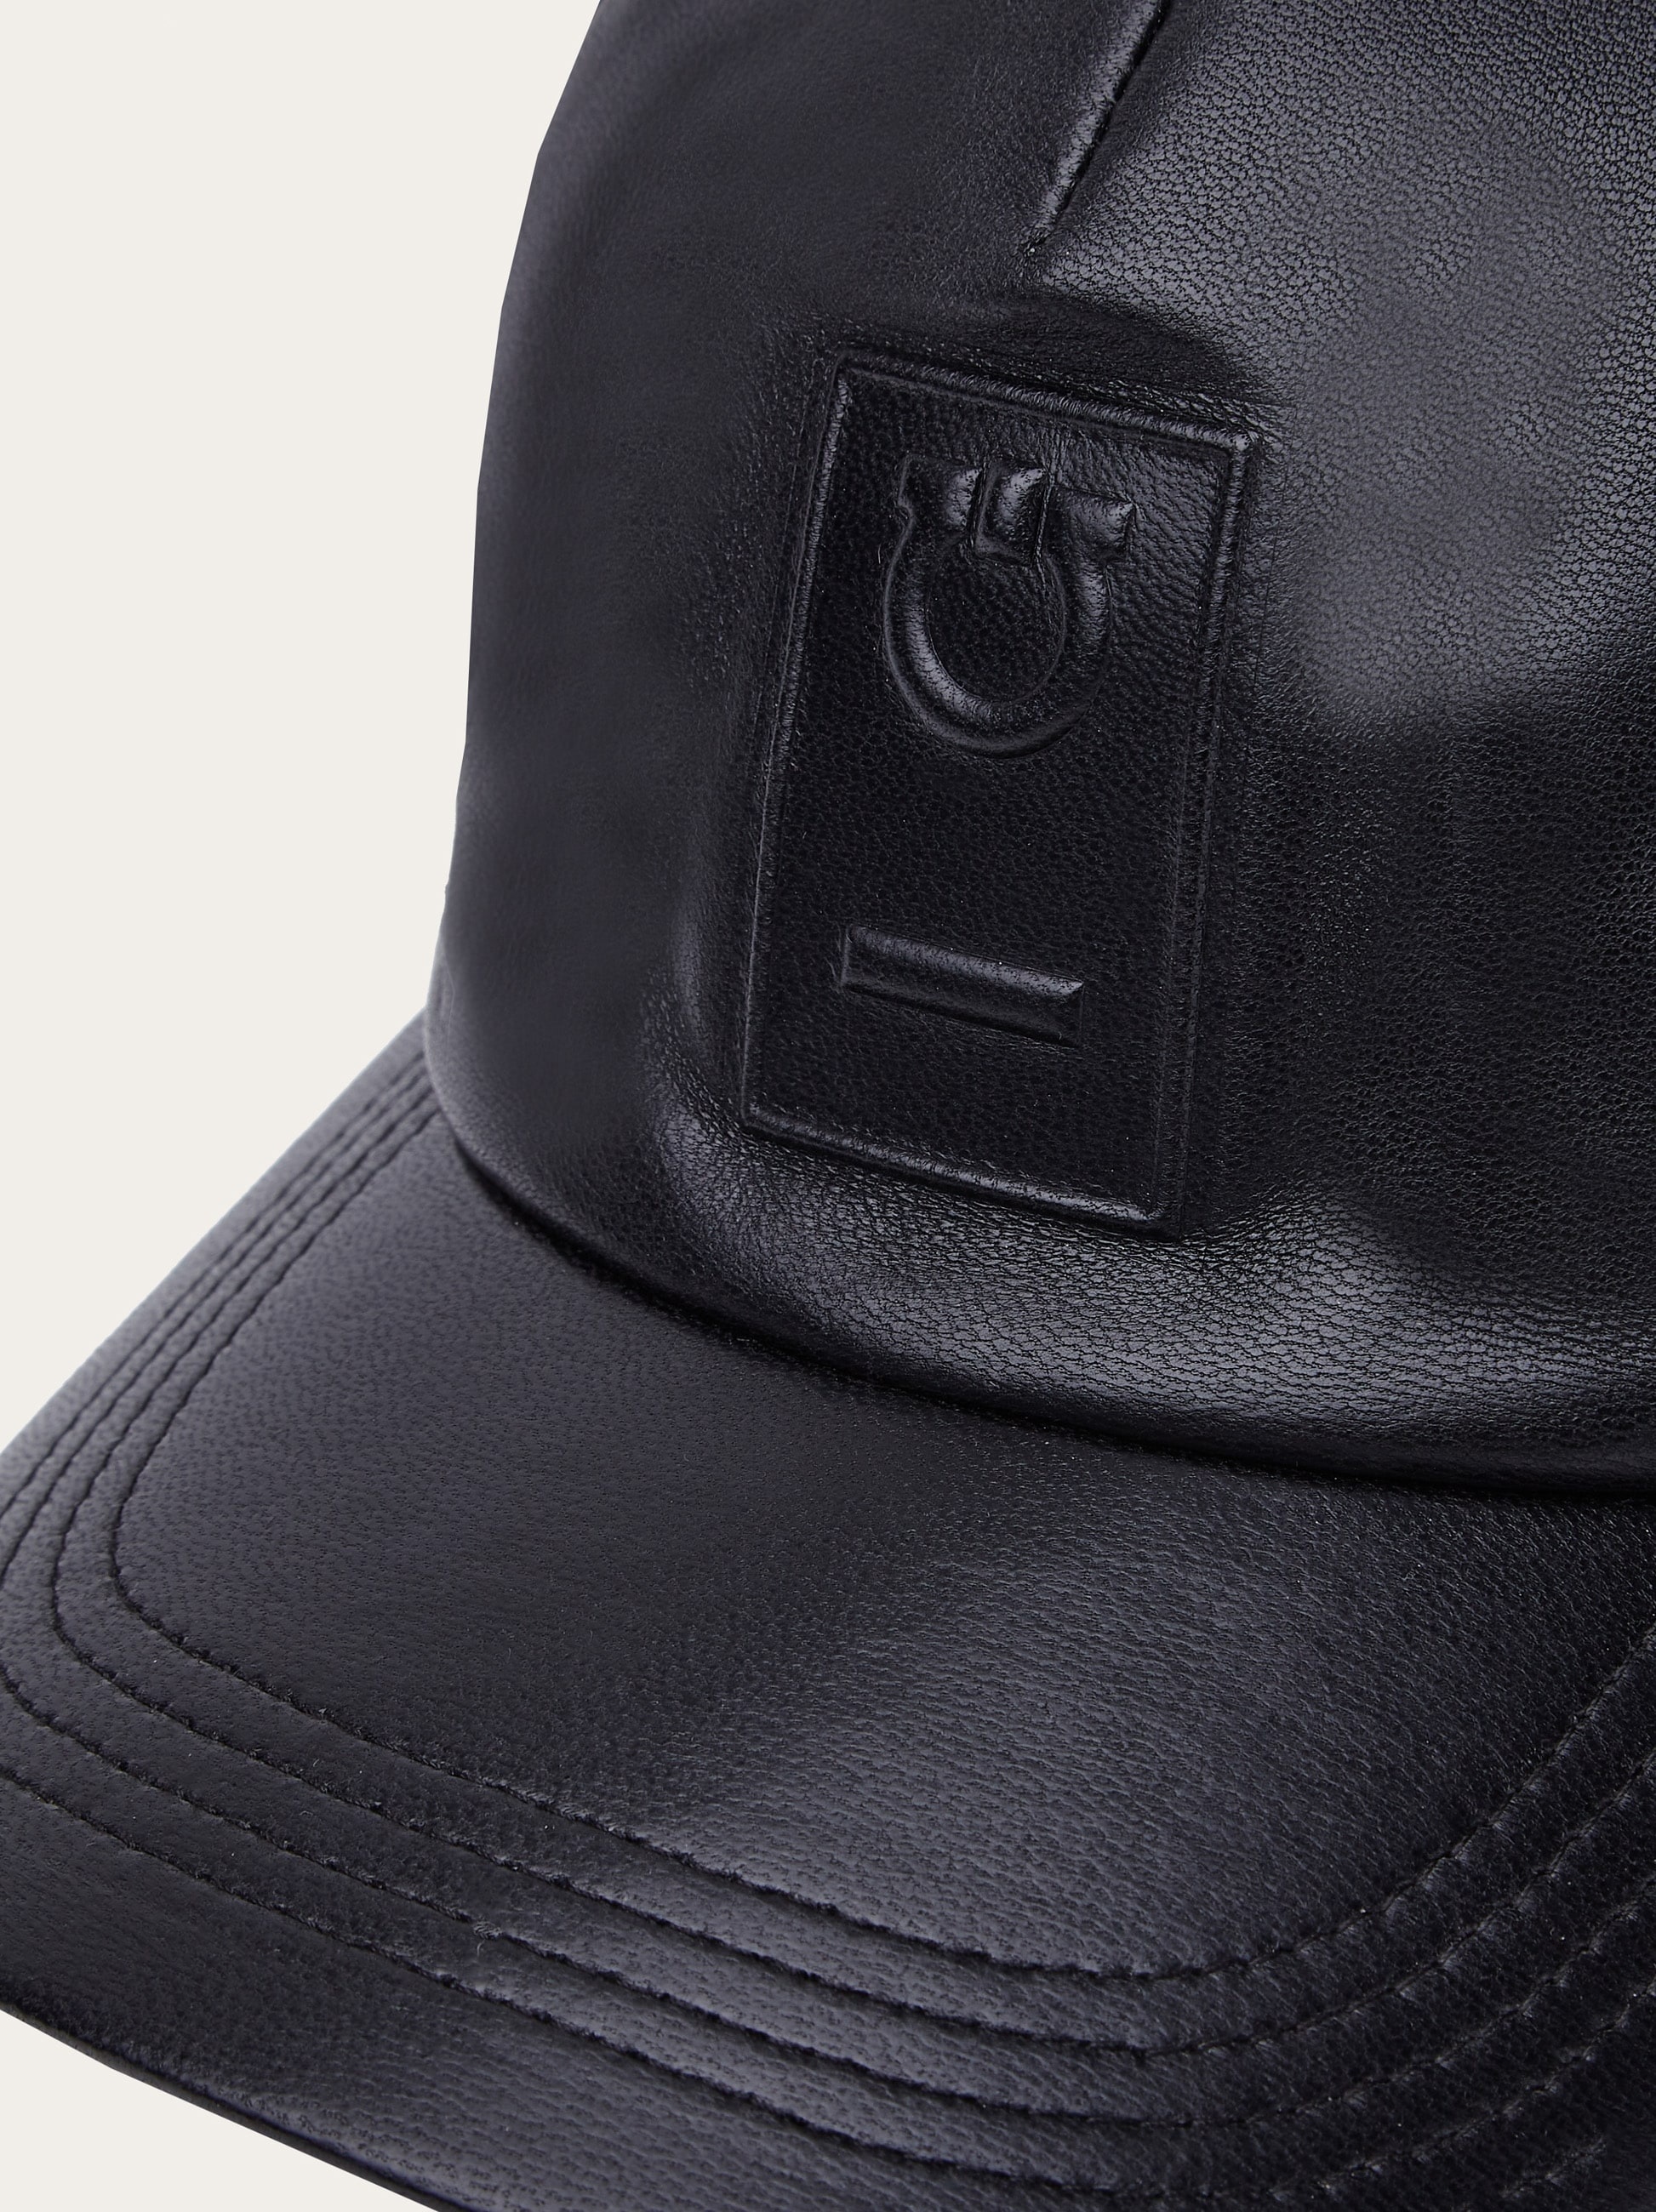 Nappa leather baseball cap - 2